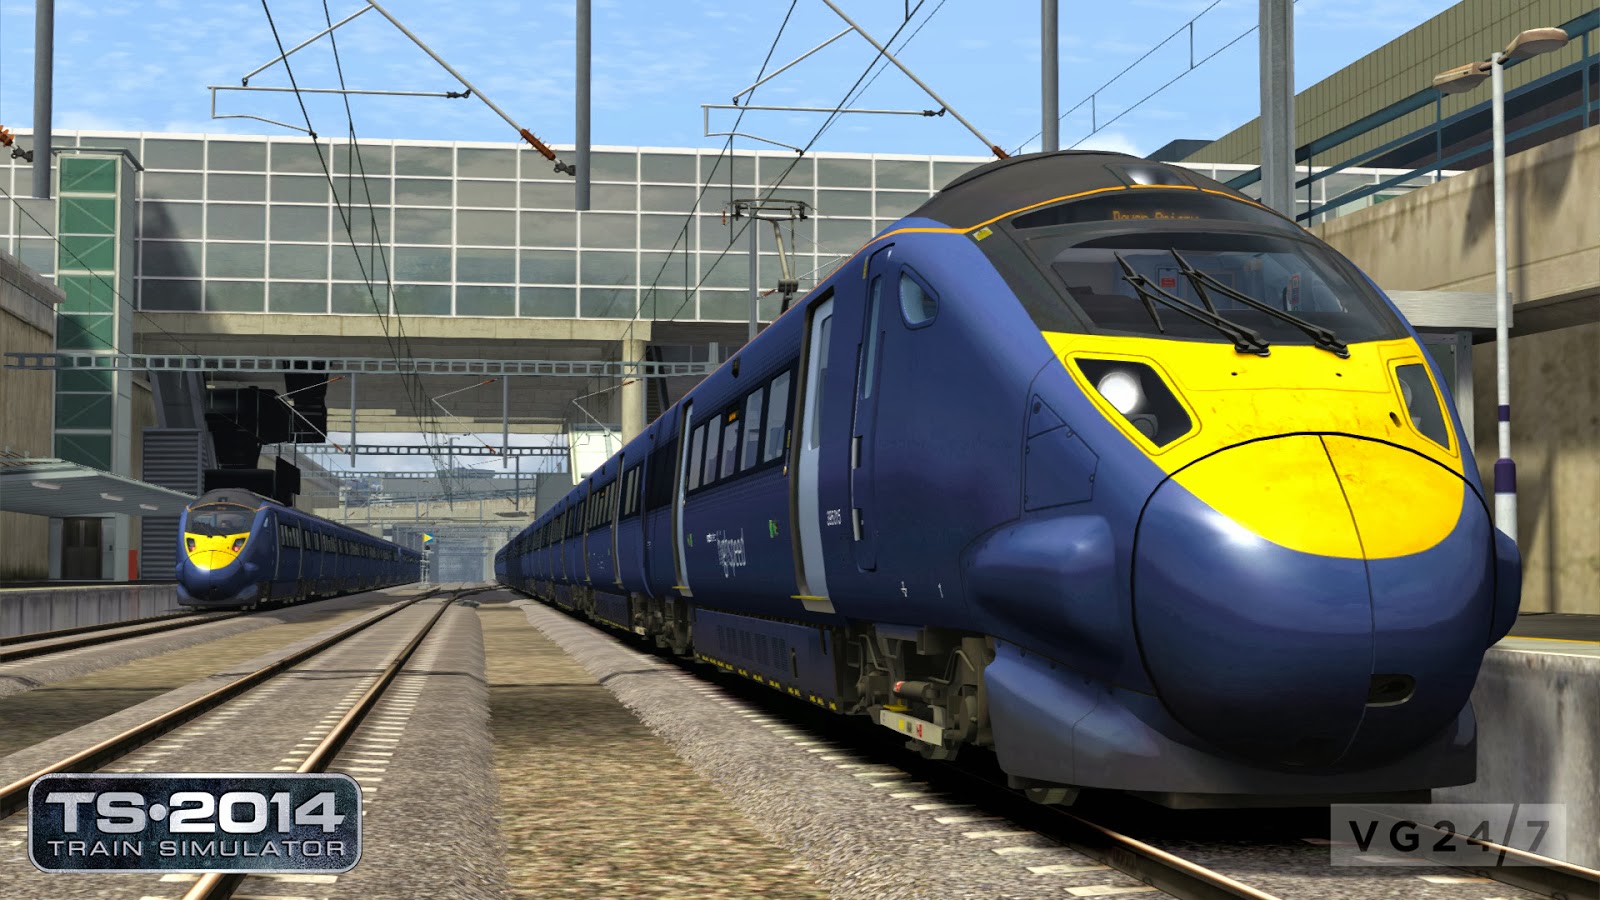 Train Simulator 2014 Serial Number Keygen